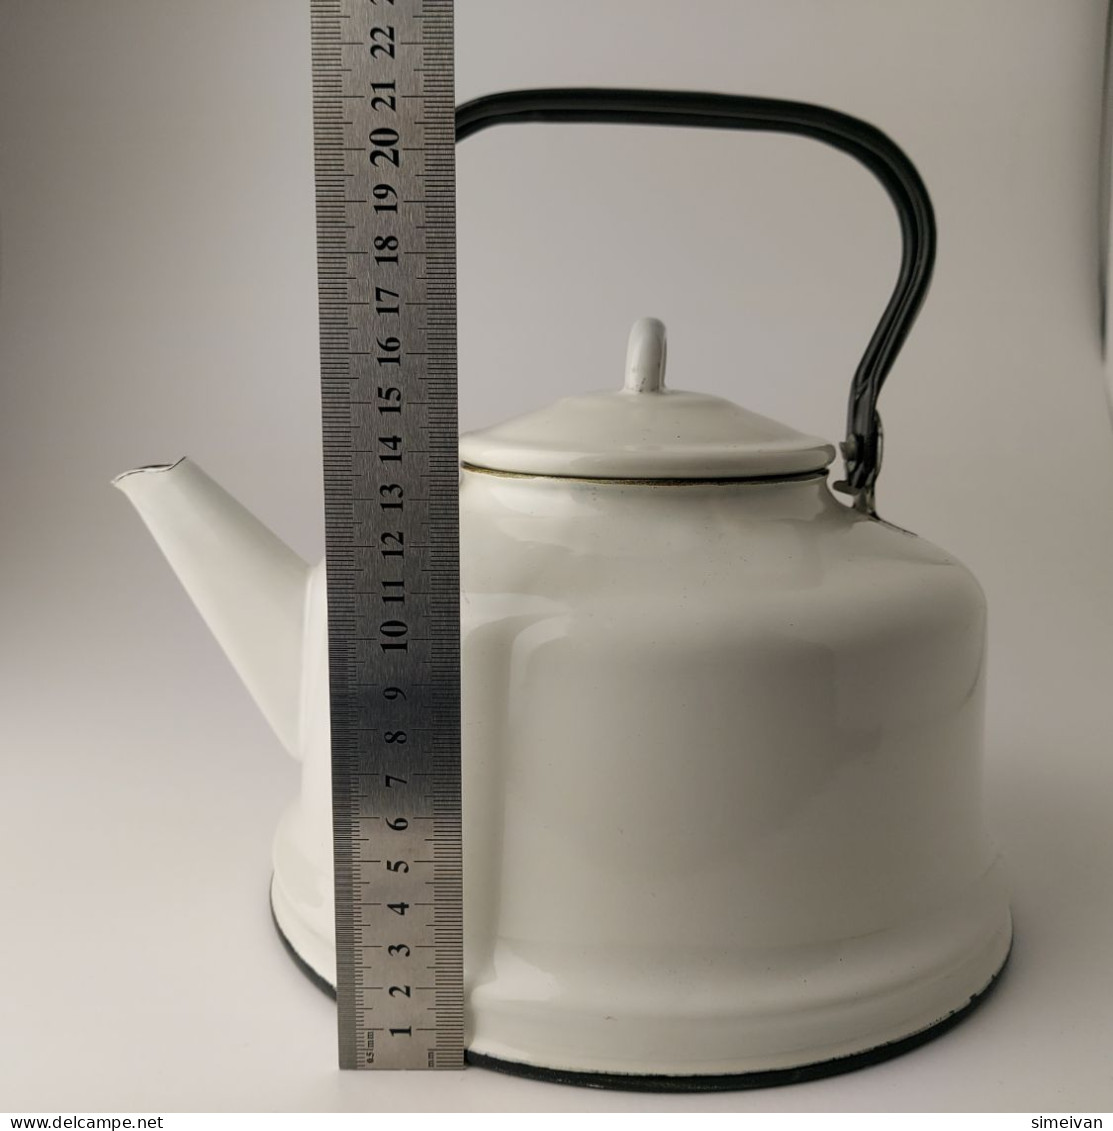 Vintage Enamel Tea Kettle Pot Metal White Black Handle 2.5 Litters Teapot #5465